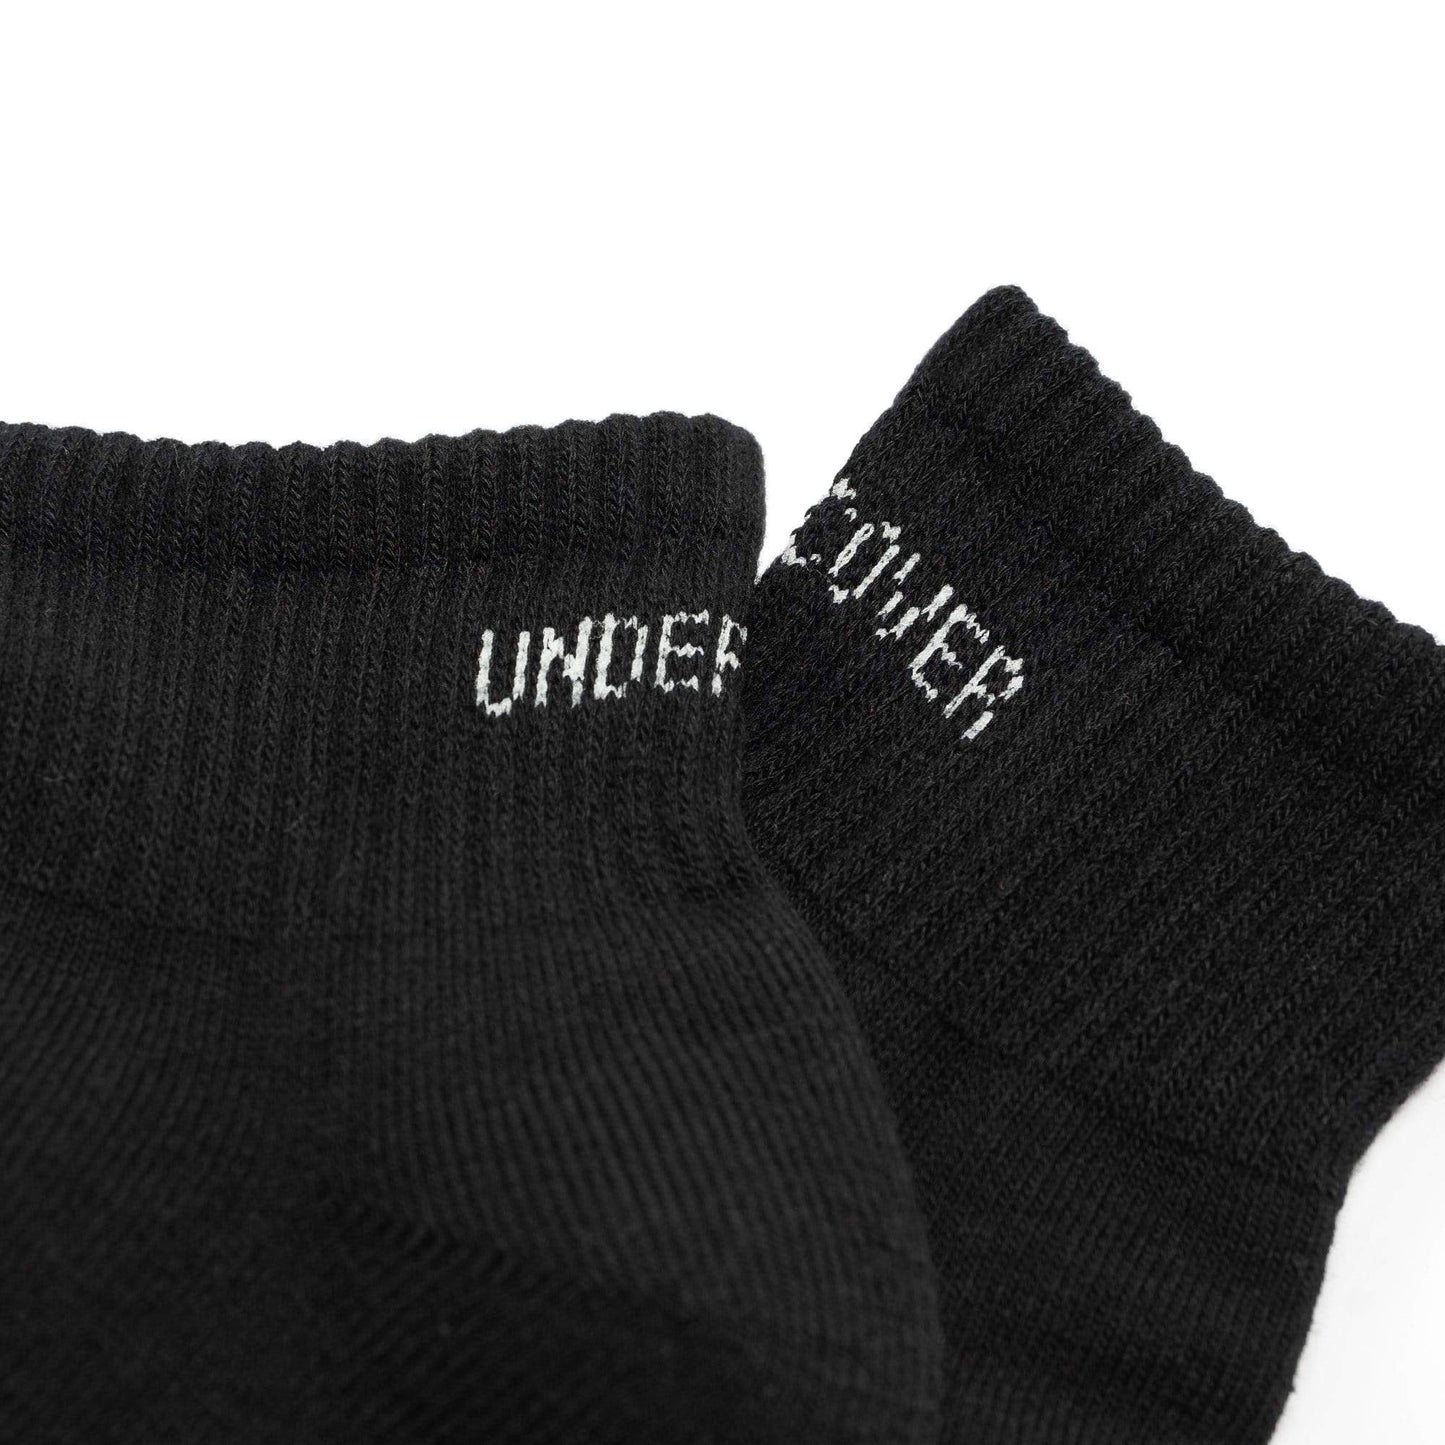 undercover undercover ankle socks (black) UCY4L02-black